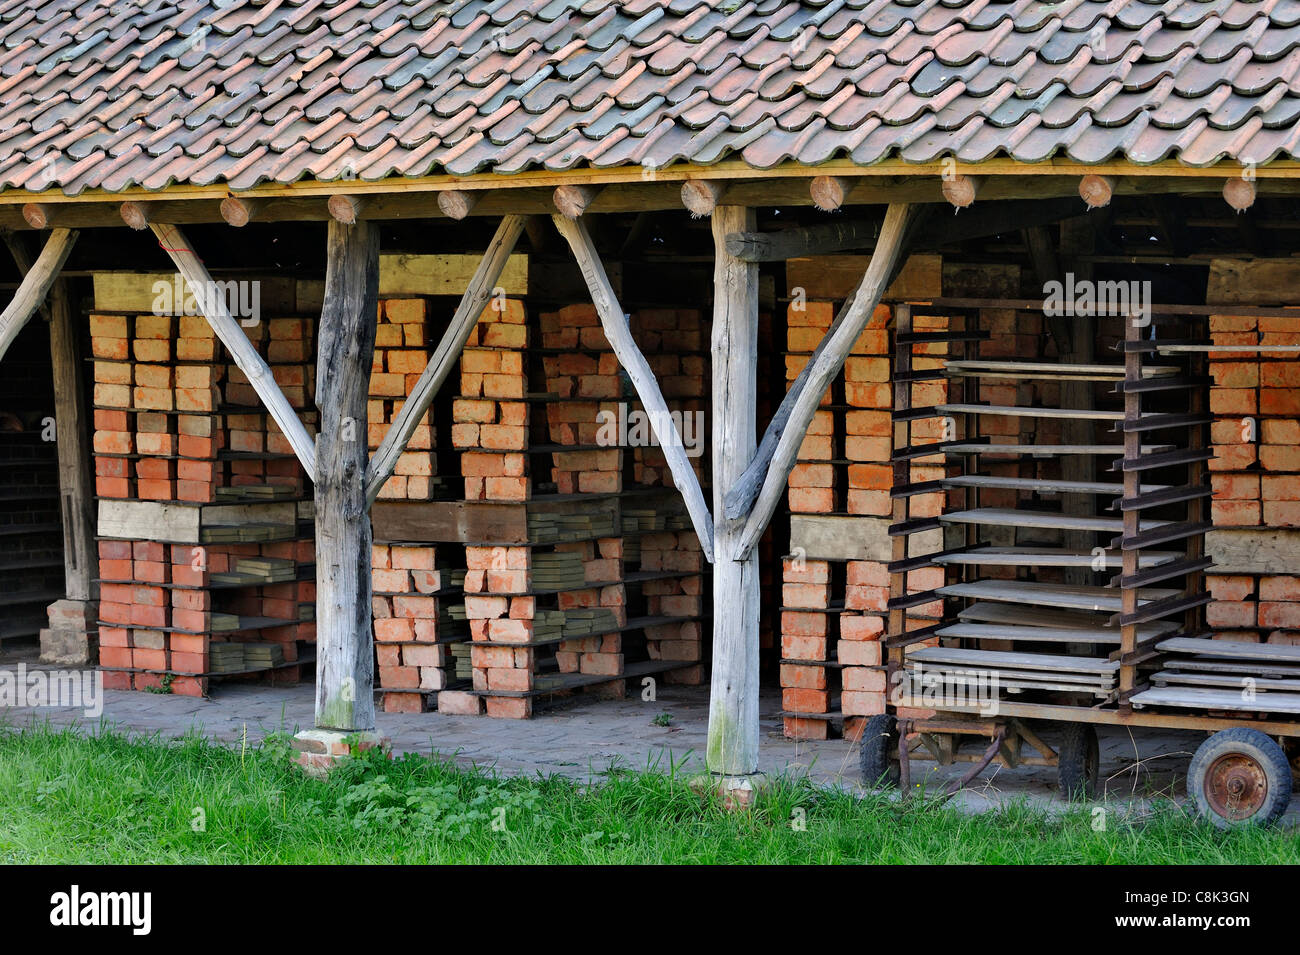 Drying yard with bricks and tiles in racks at brickworks, Boom, Belgium Stock Photo